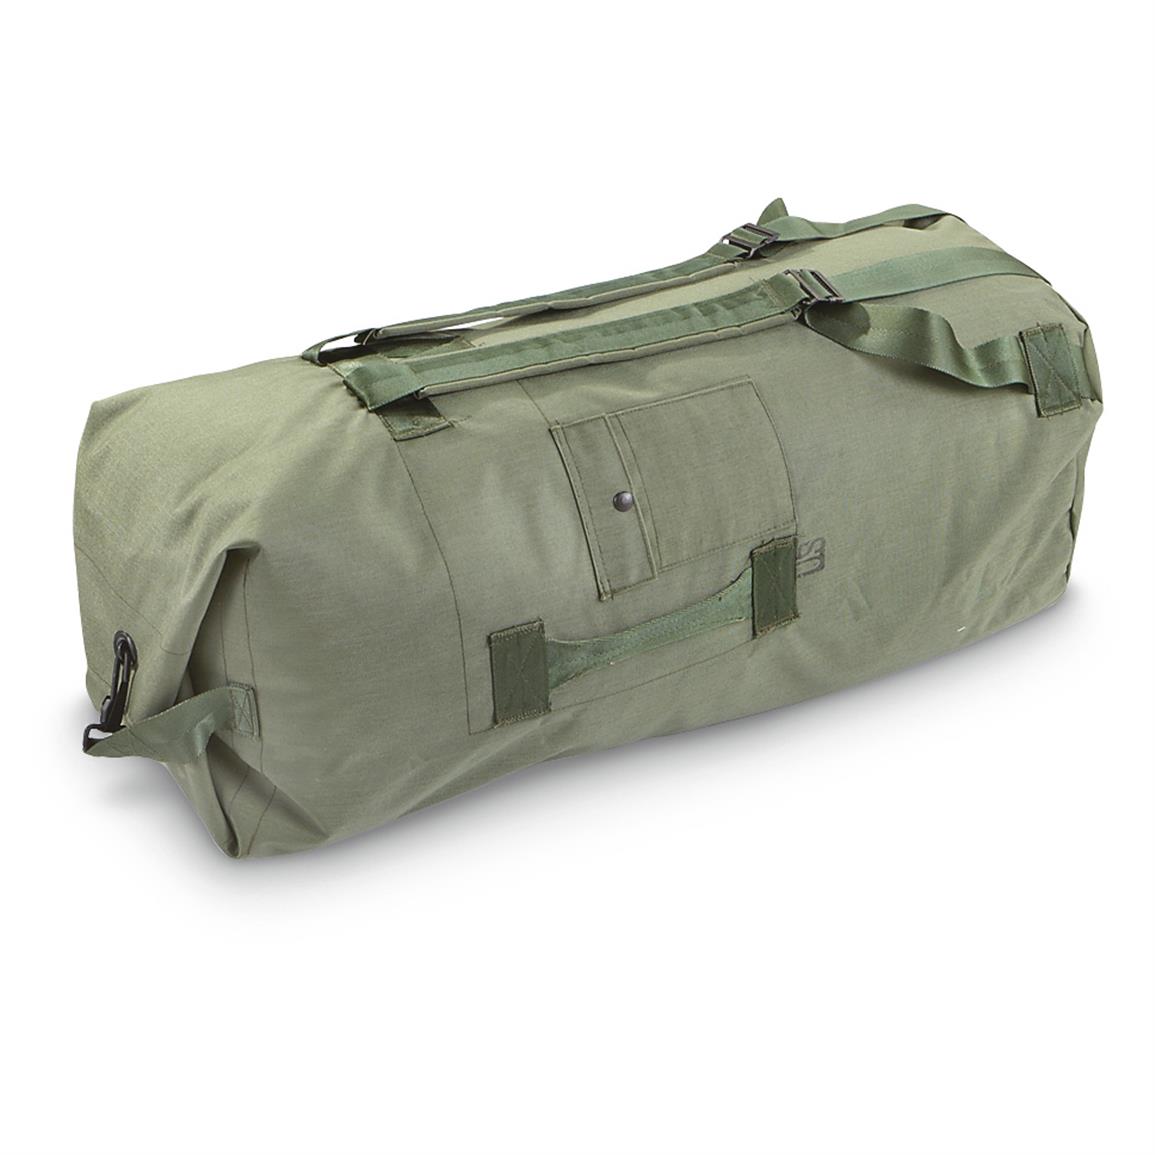 New U.S. Military Surplus Duffel Bag - 634437, Duffle Bags ...